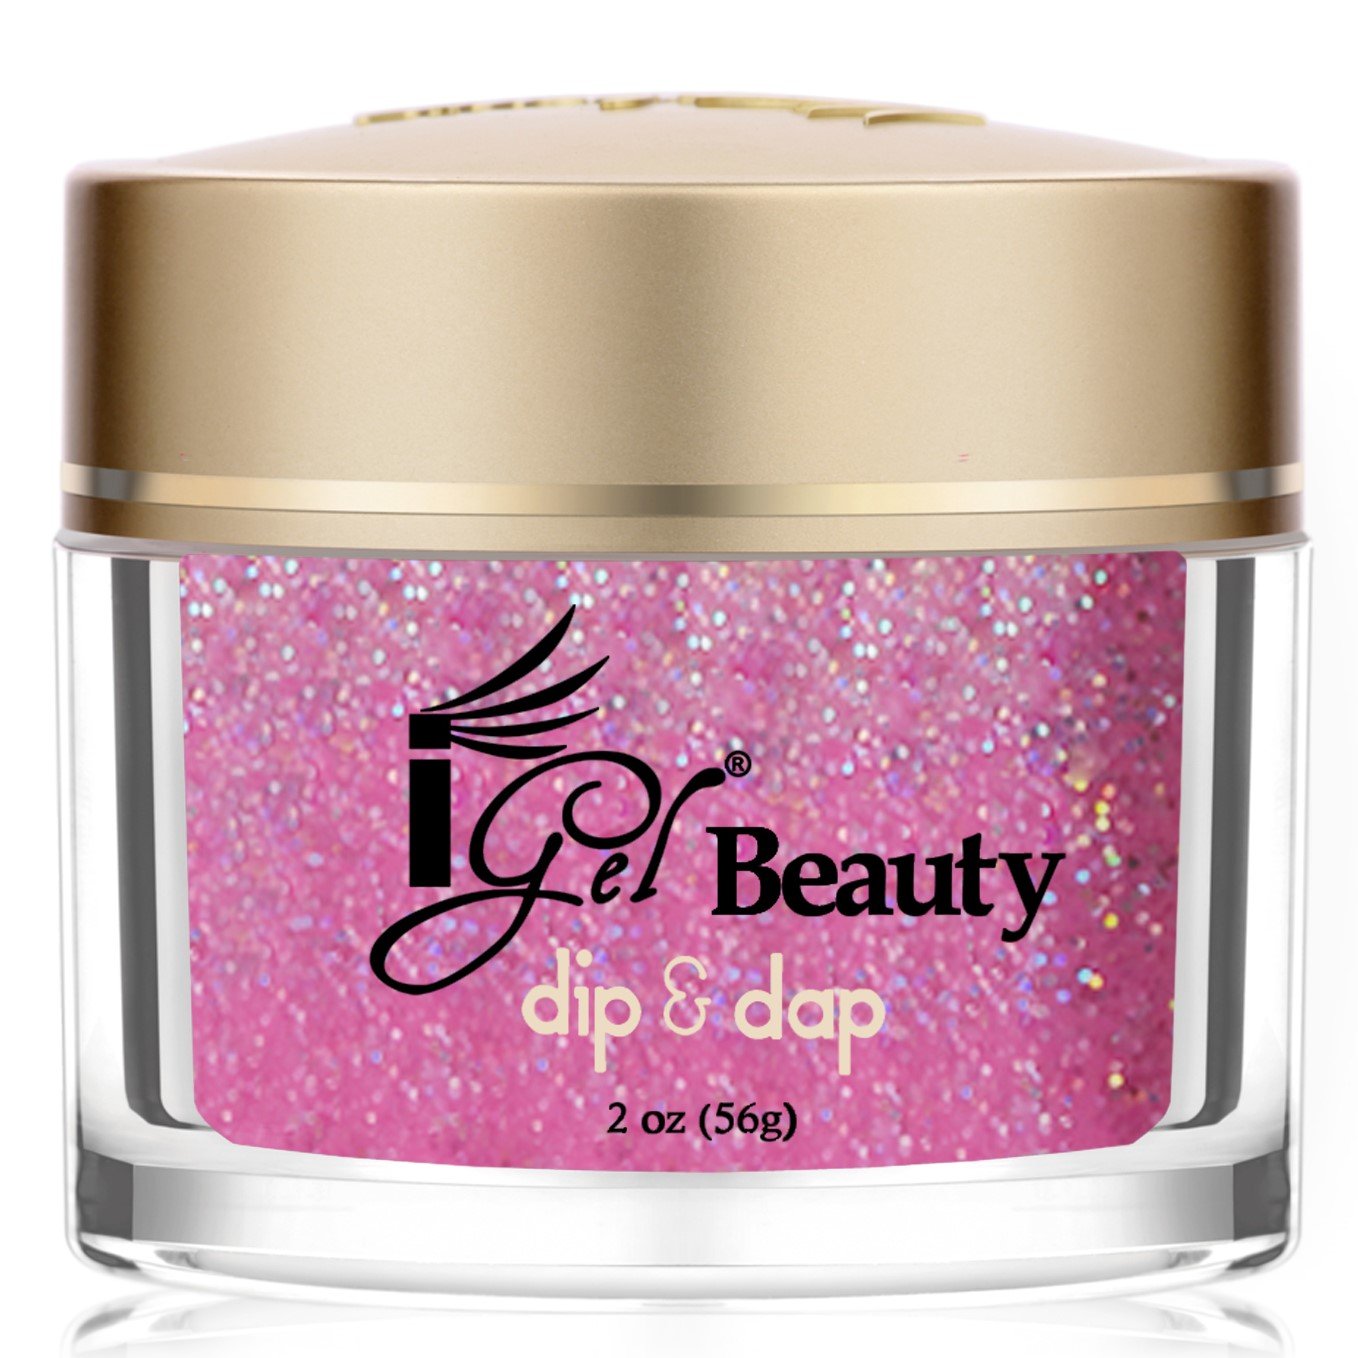 iGel Beauty - Dip & Dap Powder - DD141 Bubblegum - RECOMMENDED FOR DIP